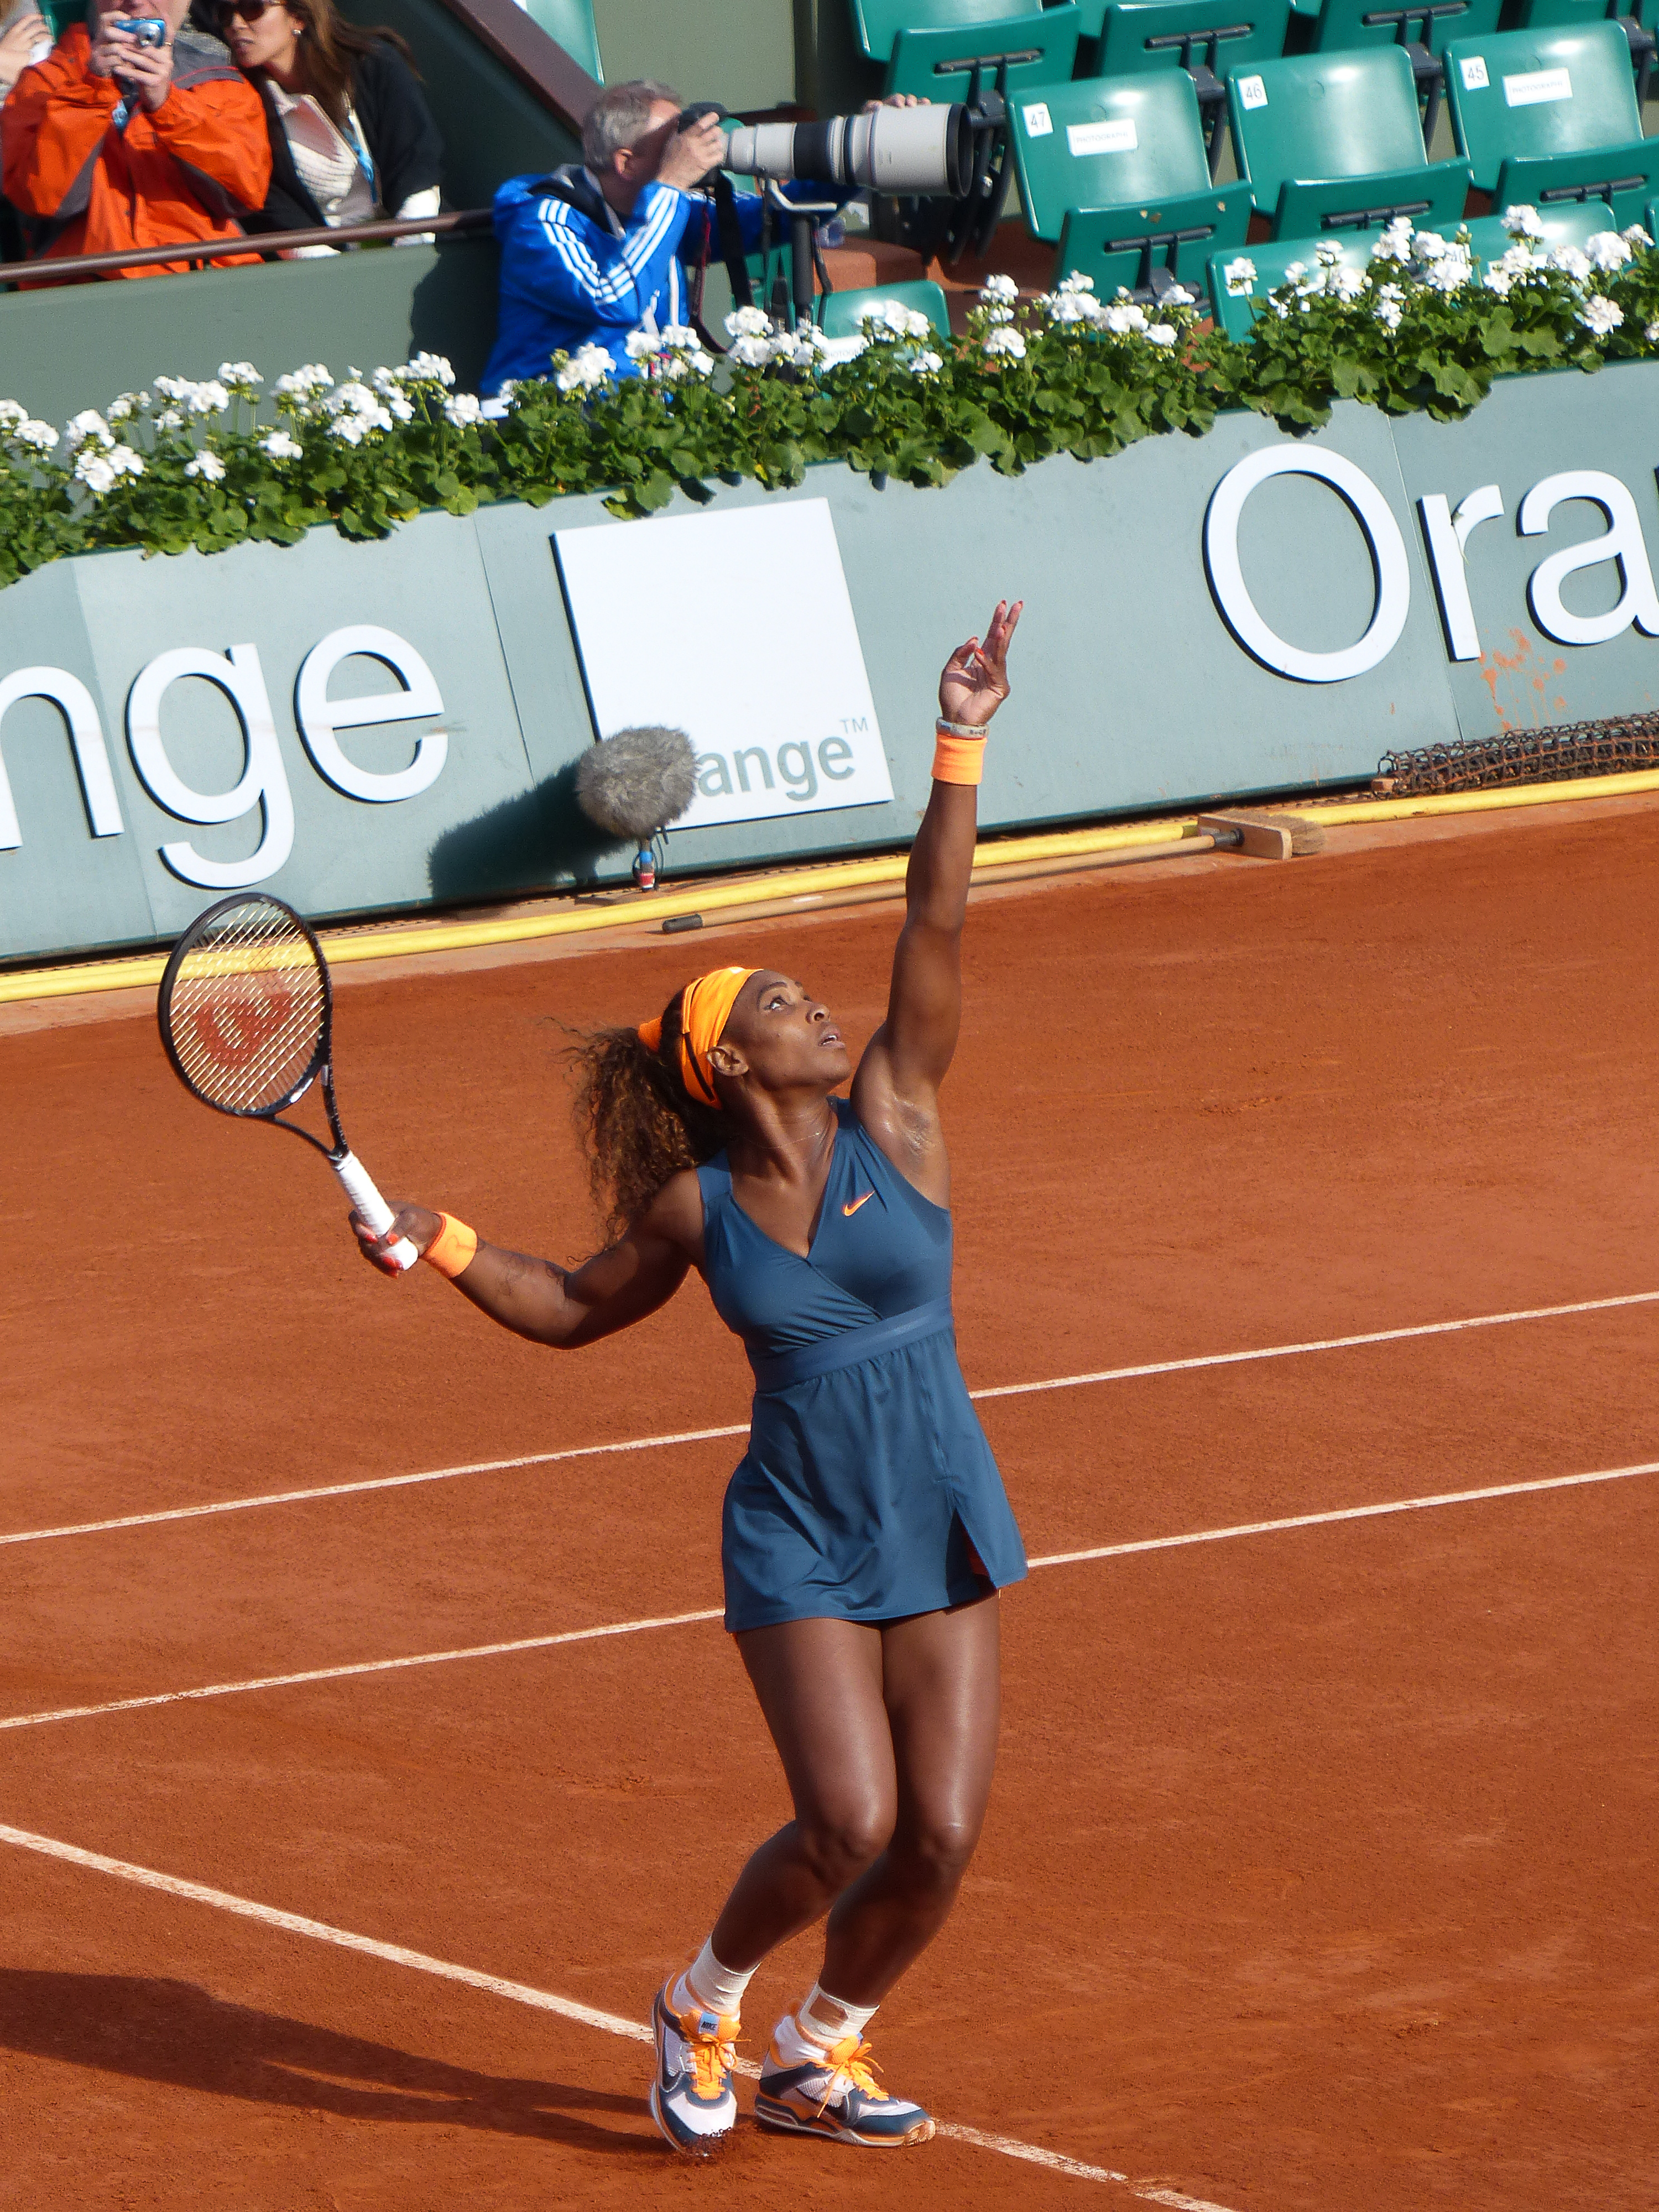 Værdiløs Duplikering newness File:Serena Williams - Roland Garros 2013 - 010.jpg - Wikimedia Commons